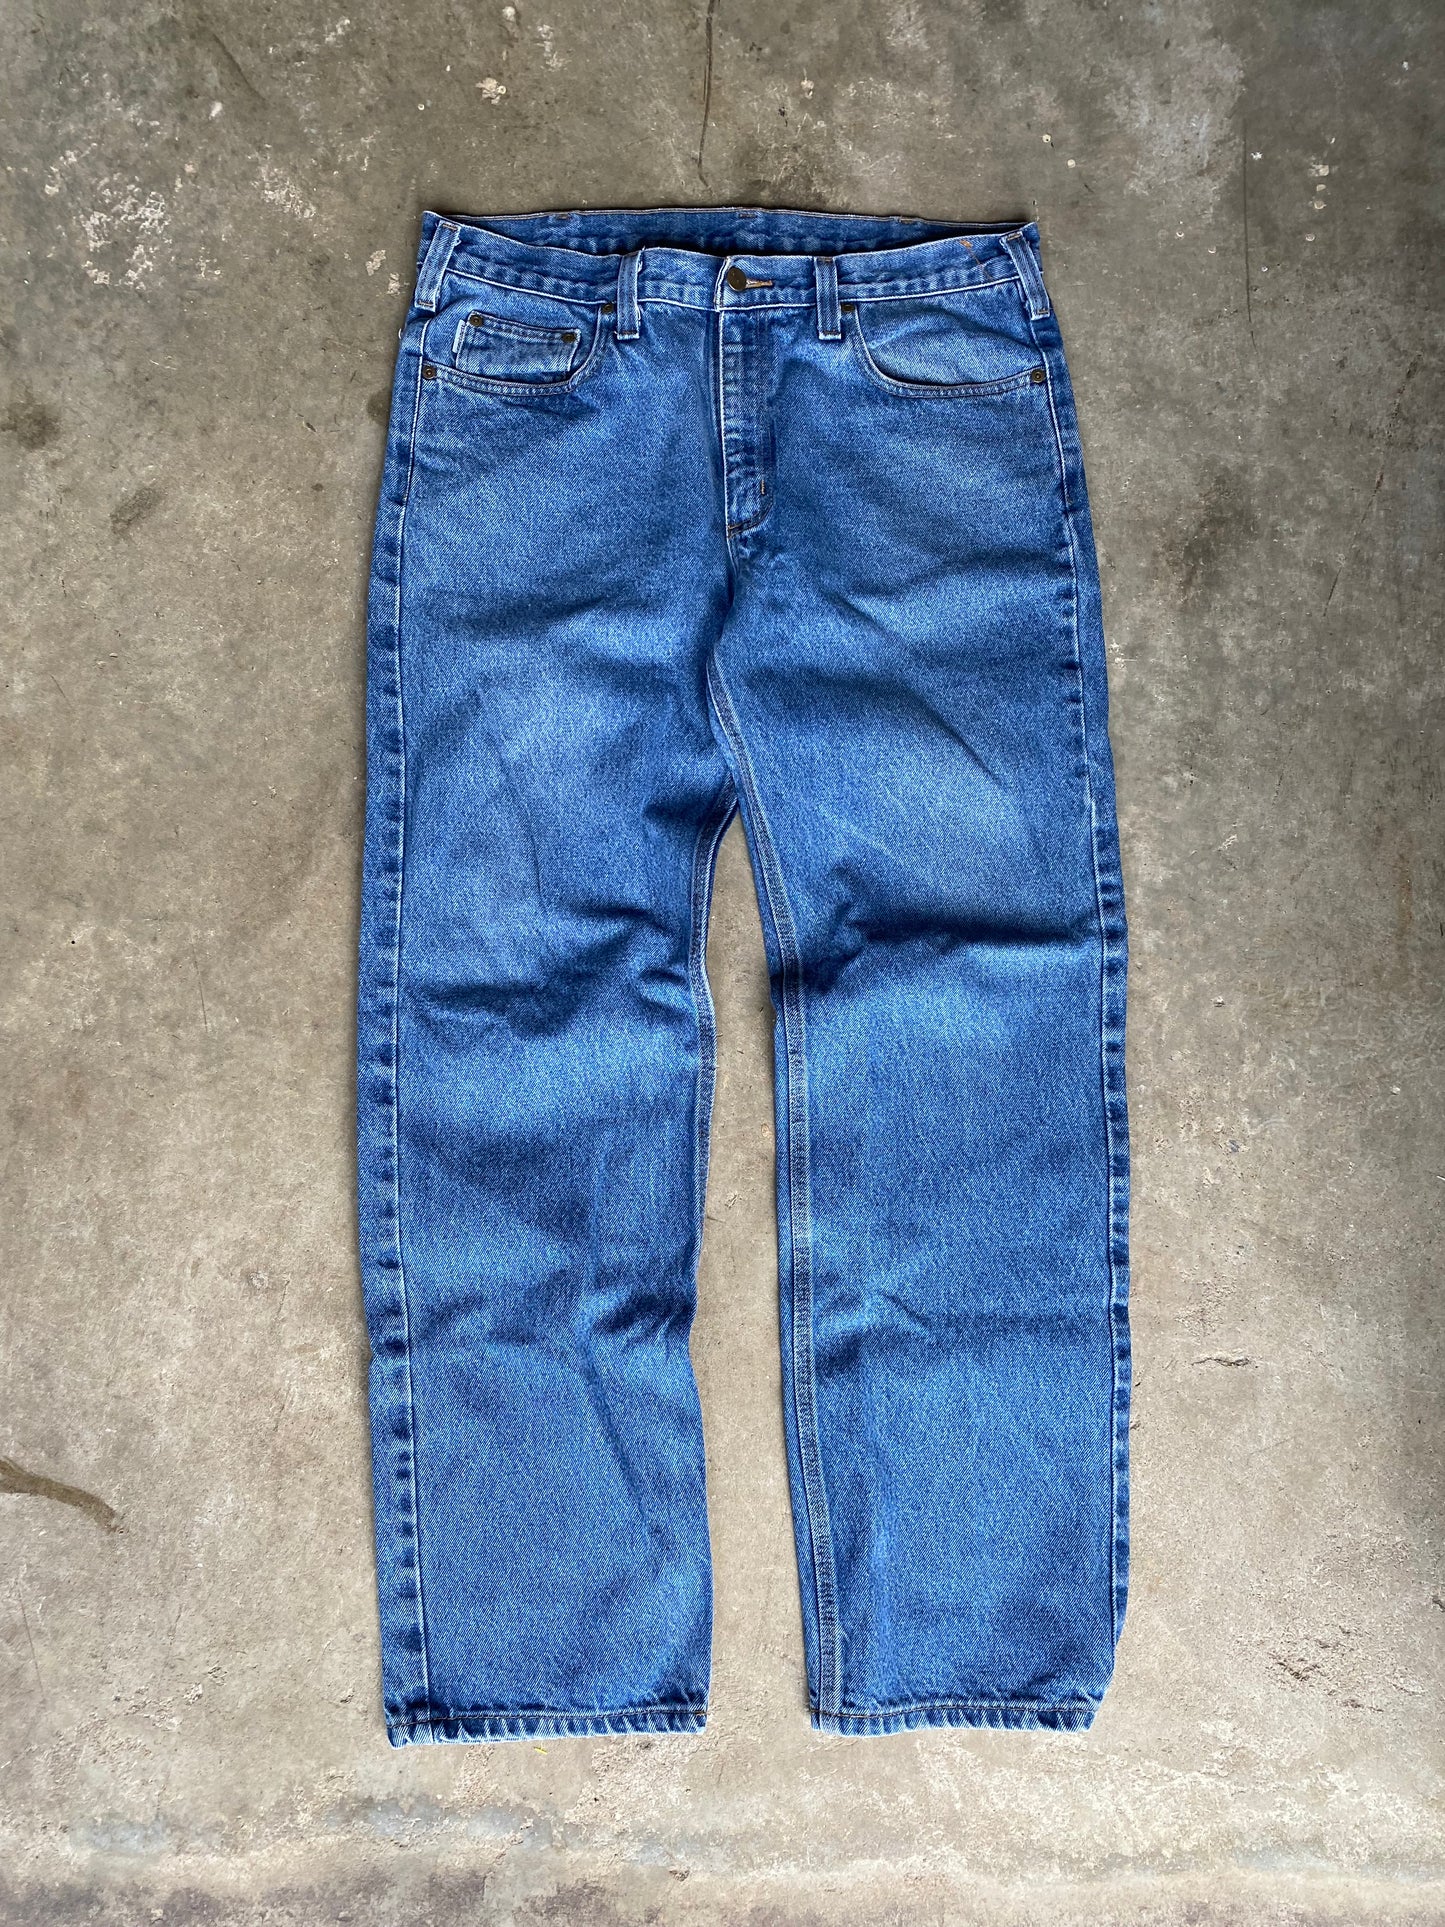 36x32 Carhartt Jeans